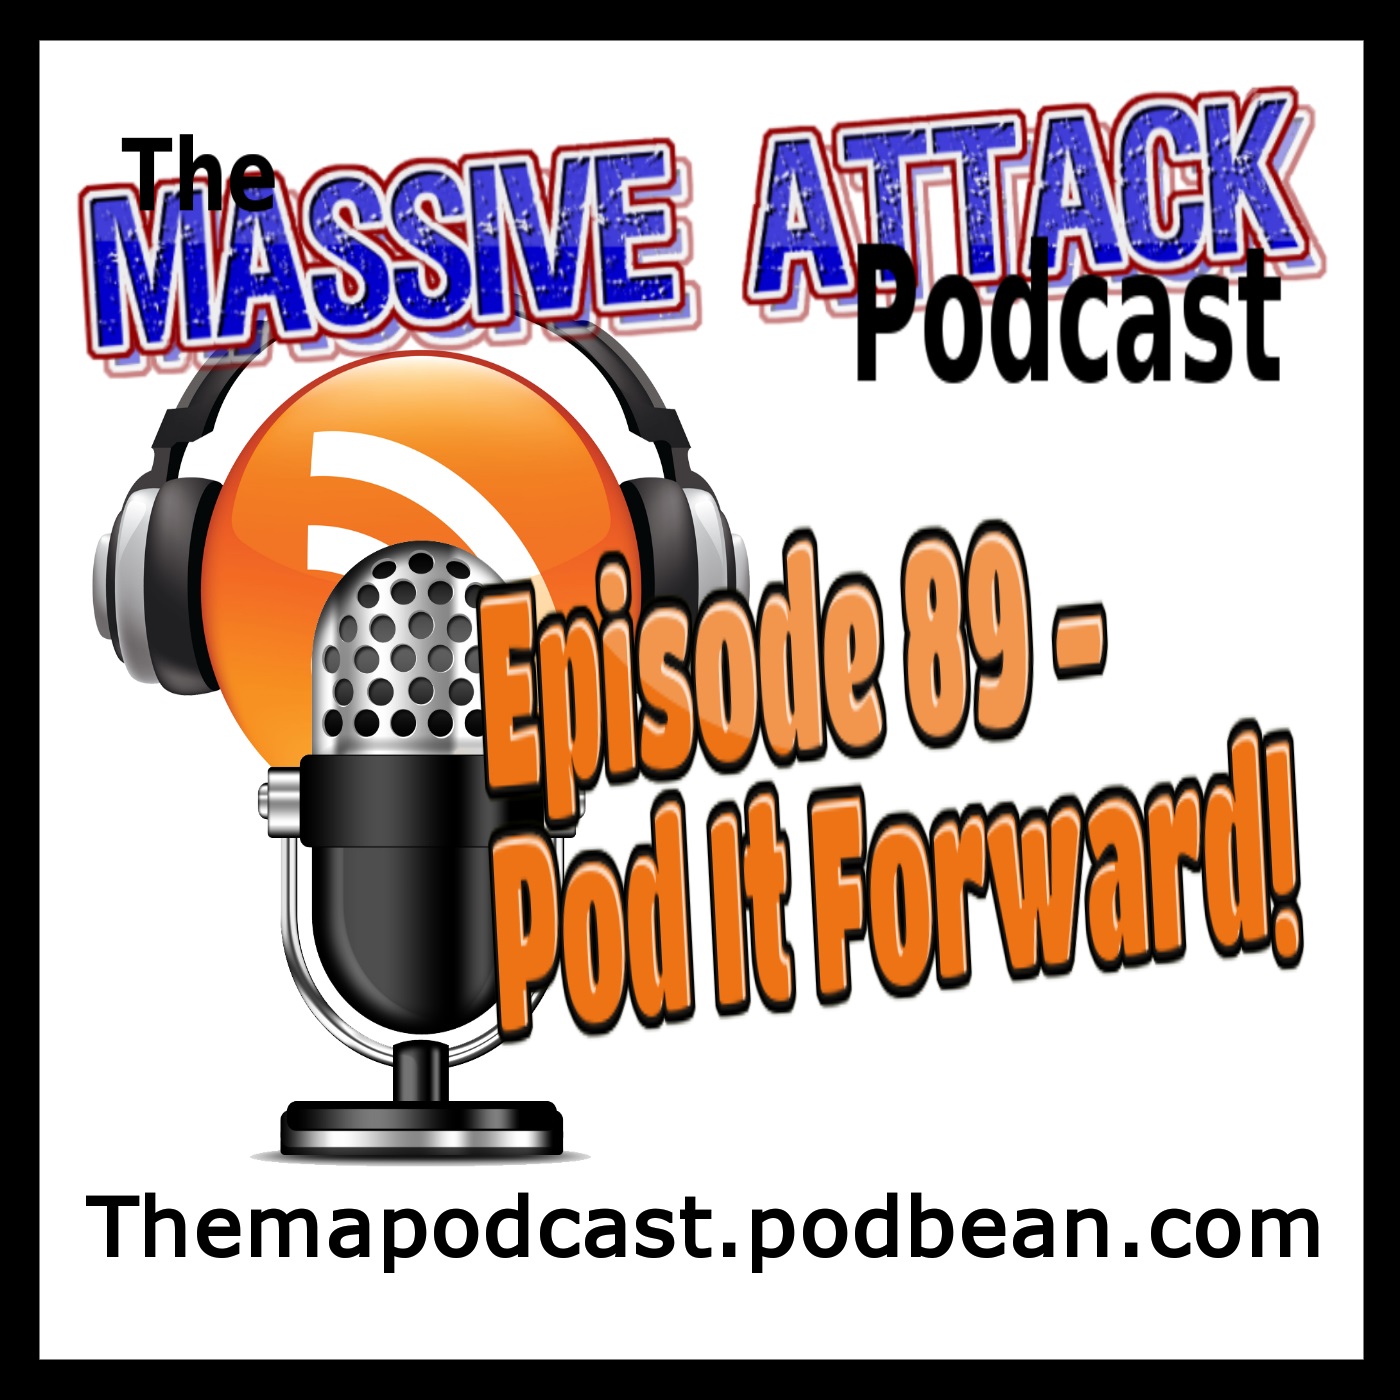 Episode 89 - Pod It Forward!